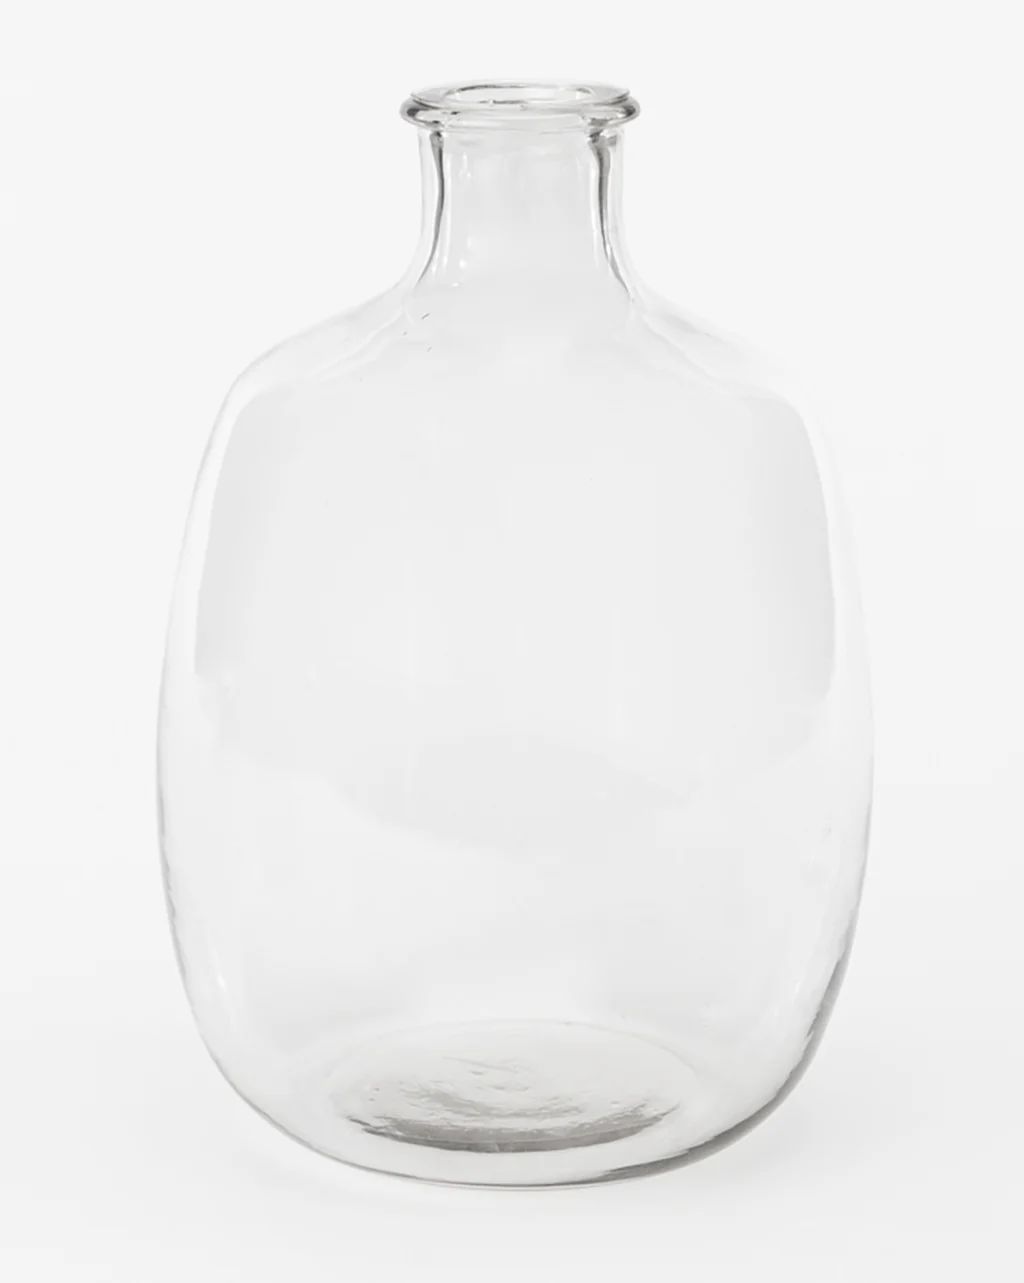 Tara Glass Vase | McGee & Co.